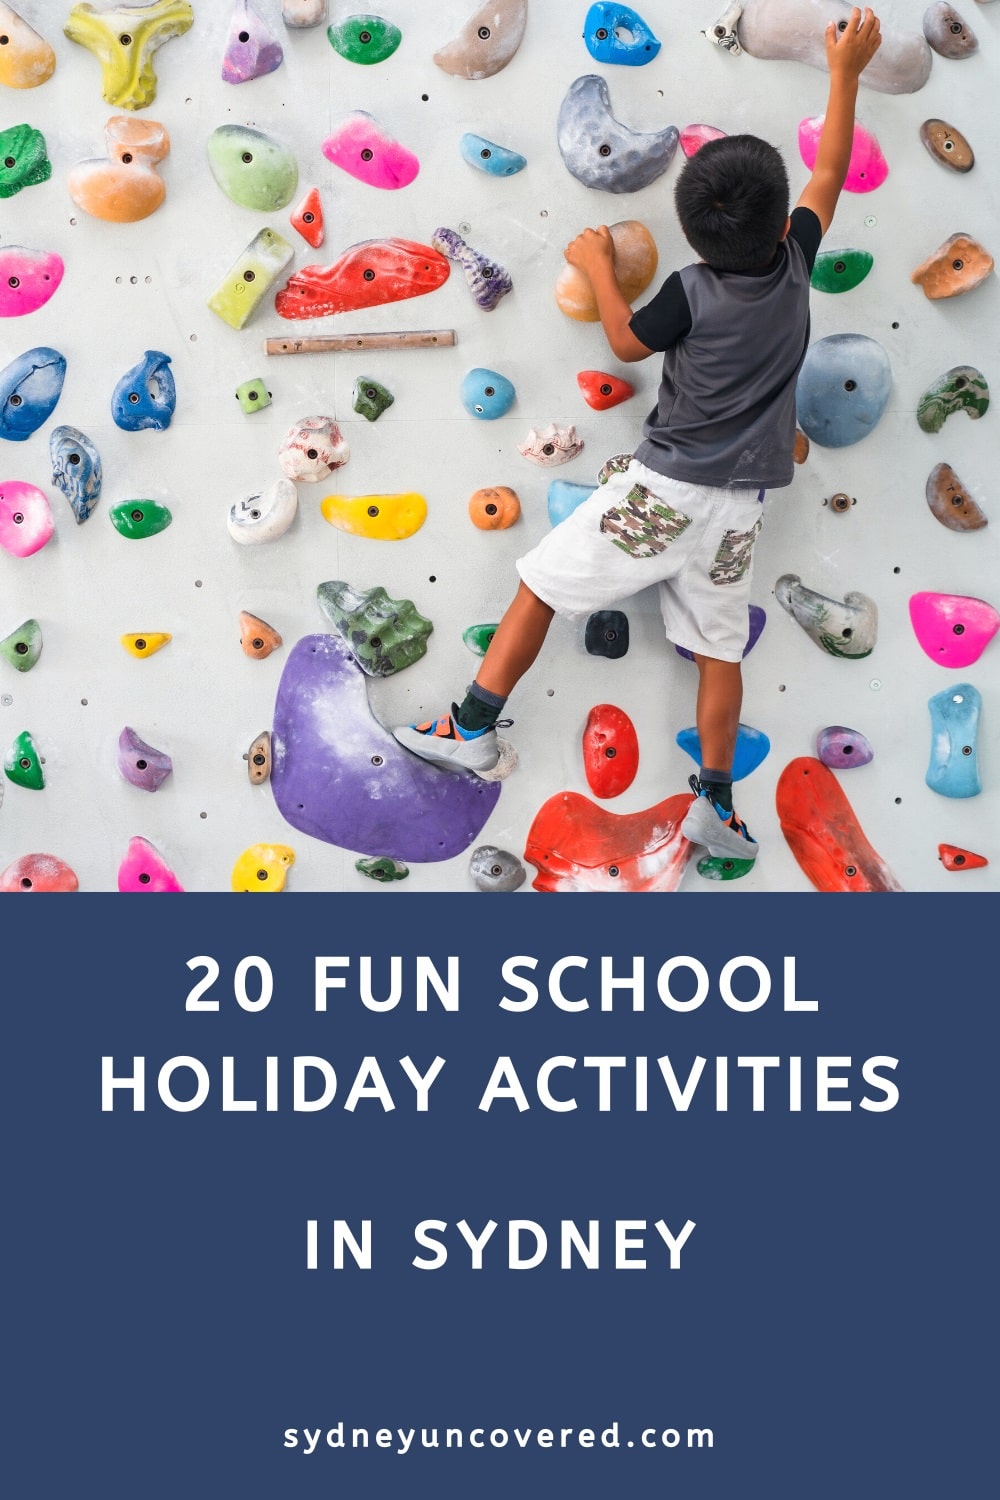 20 Fun school holiday activities in Sydney